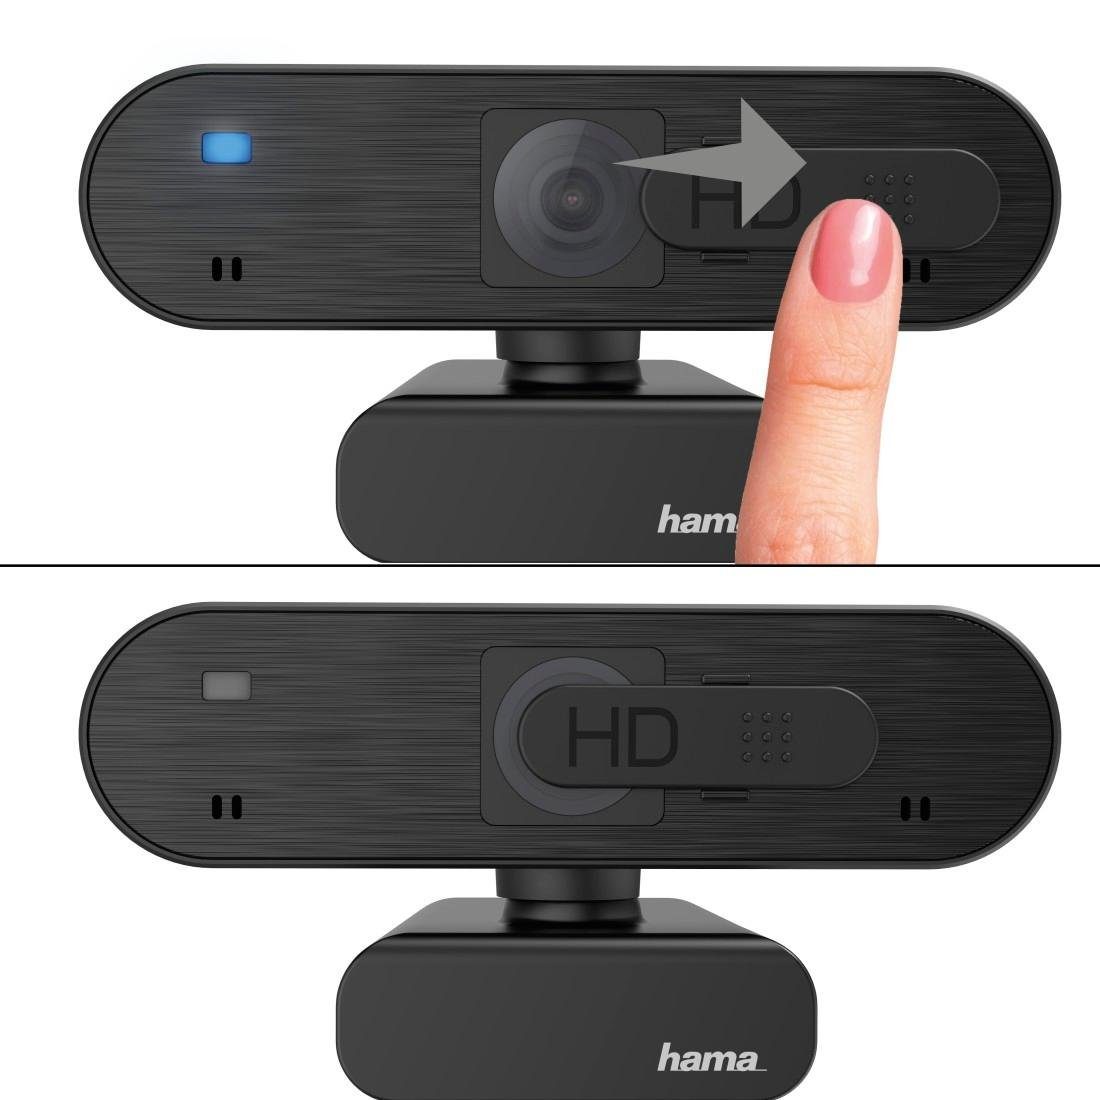 Hama PC-Webcam "C-600 Pro", Webcam 1080p Full-HD Webcam